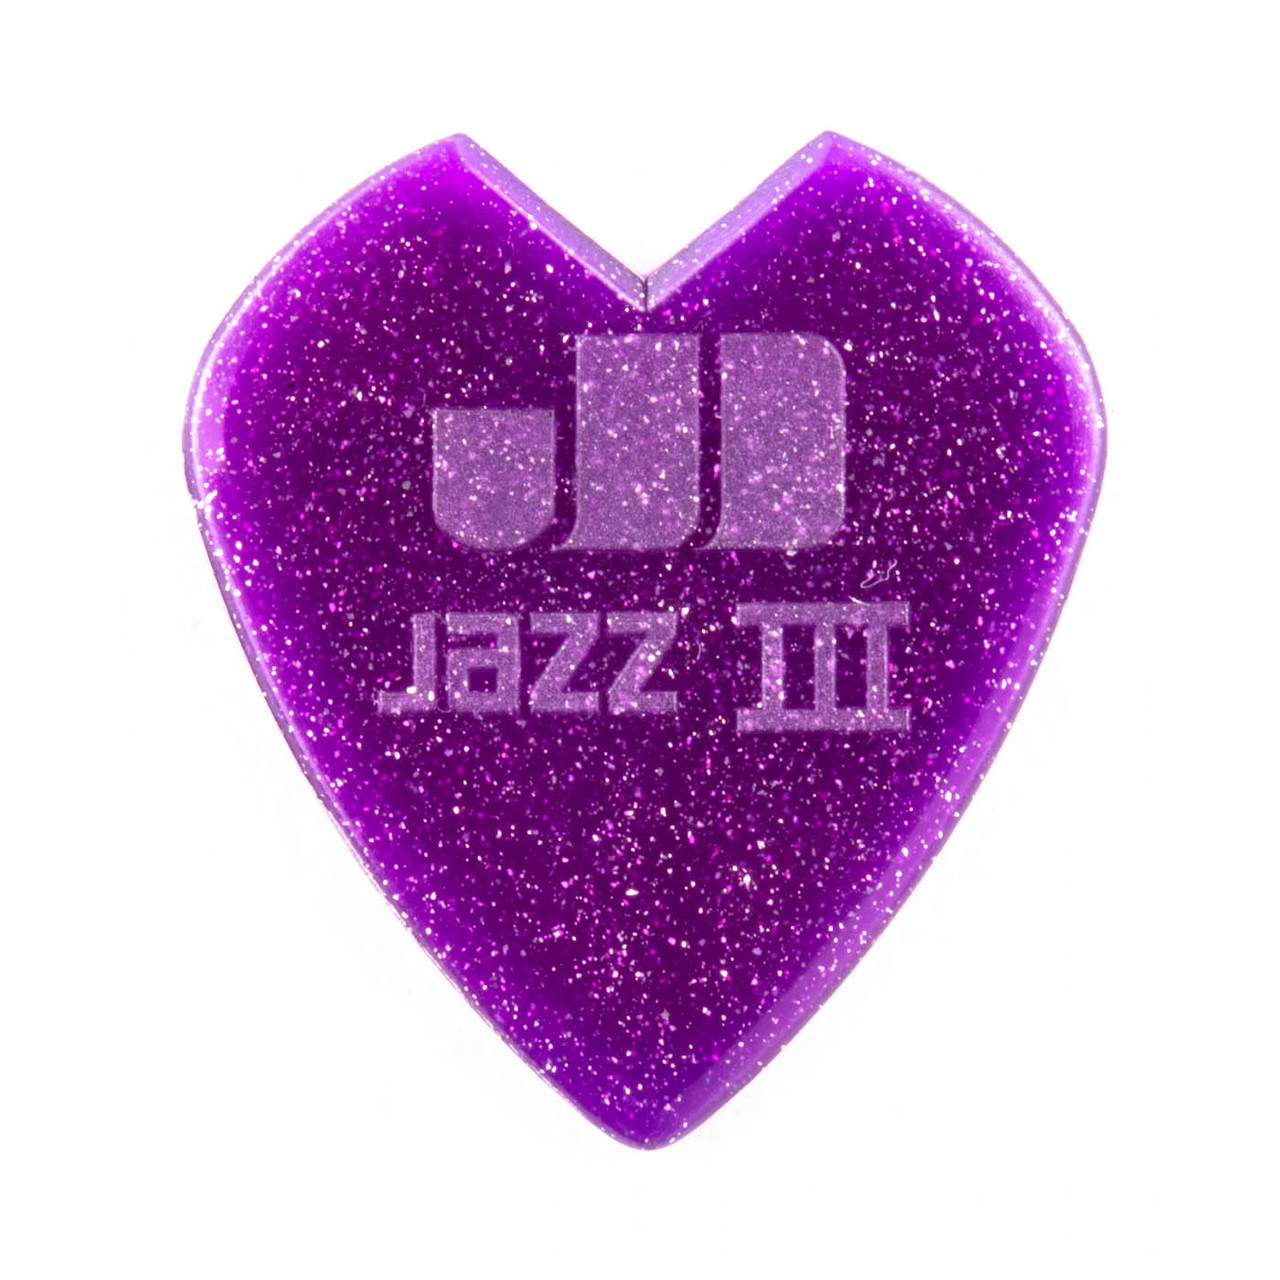 Jim Dunlop Kirk Hammett Jazz Iii Pick Purple Sparkle X24 - MÉdiator & Onglet - Variation 3